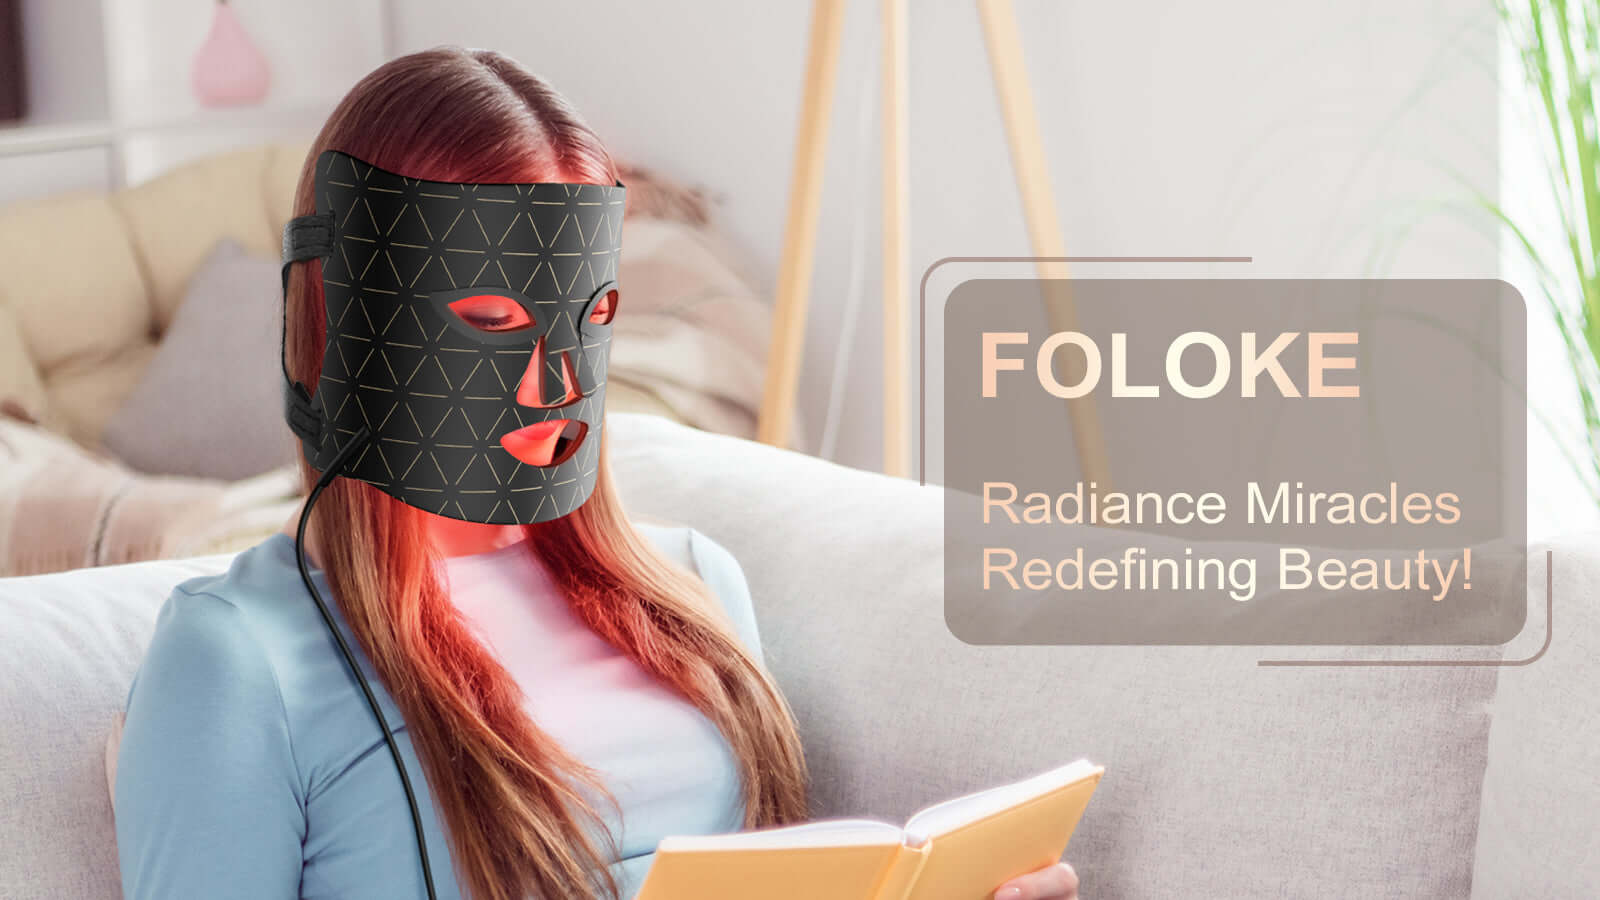 Summer Beauty: Foloke LED Therapy Face Mask Brings You Refreshing Radiance